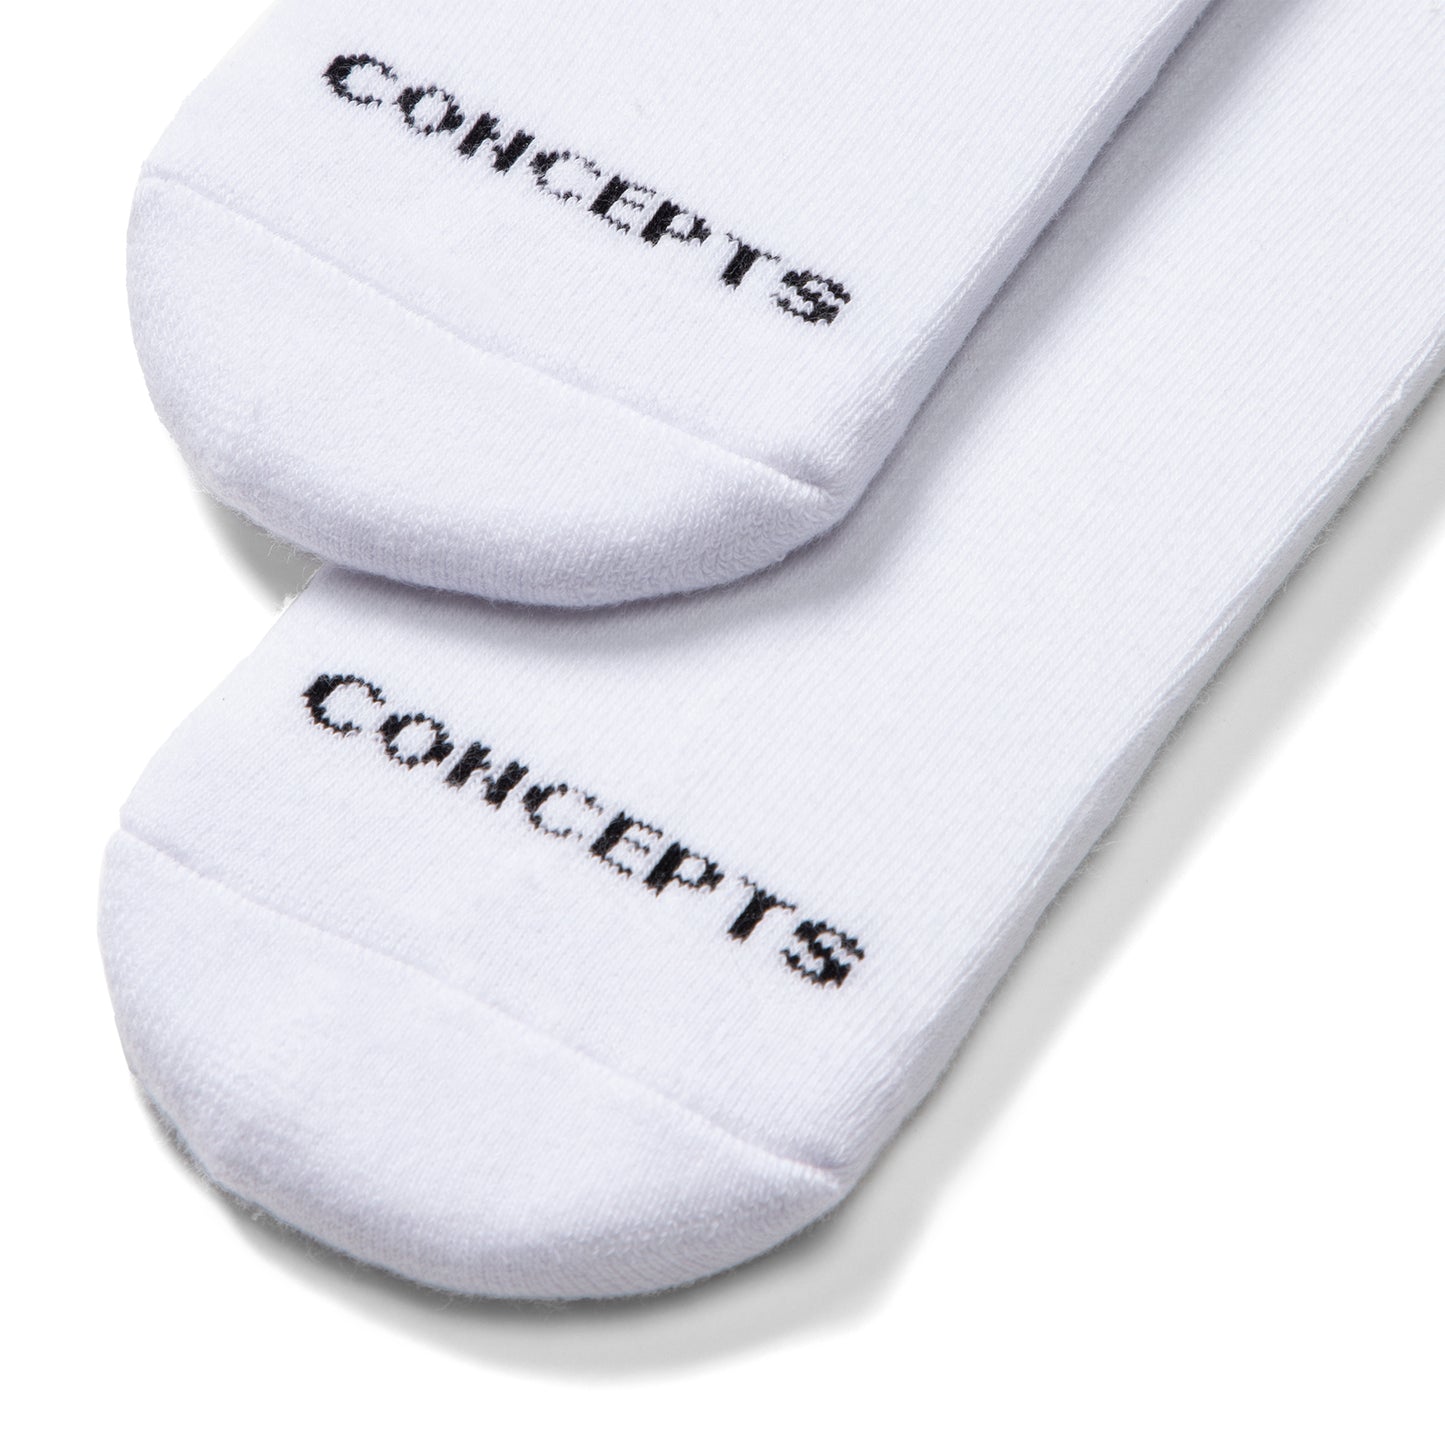 Concepts Random C Sock (White/Green)